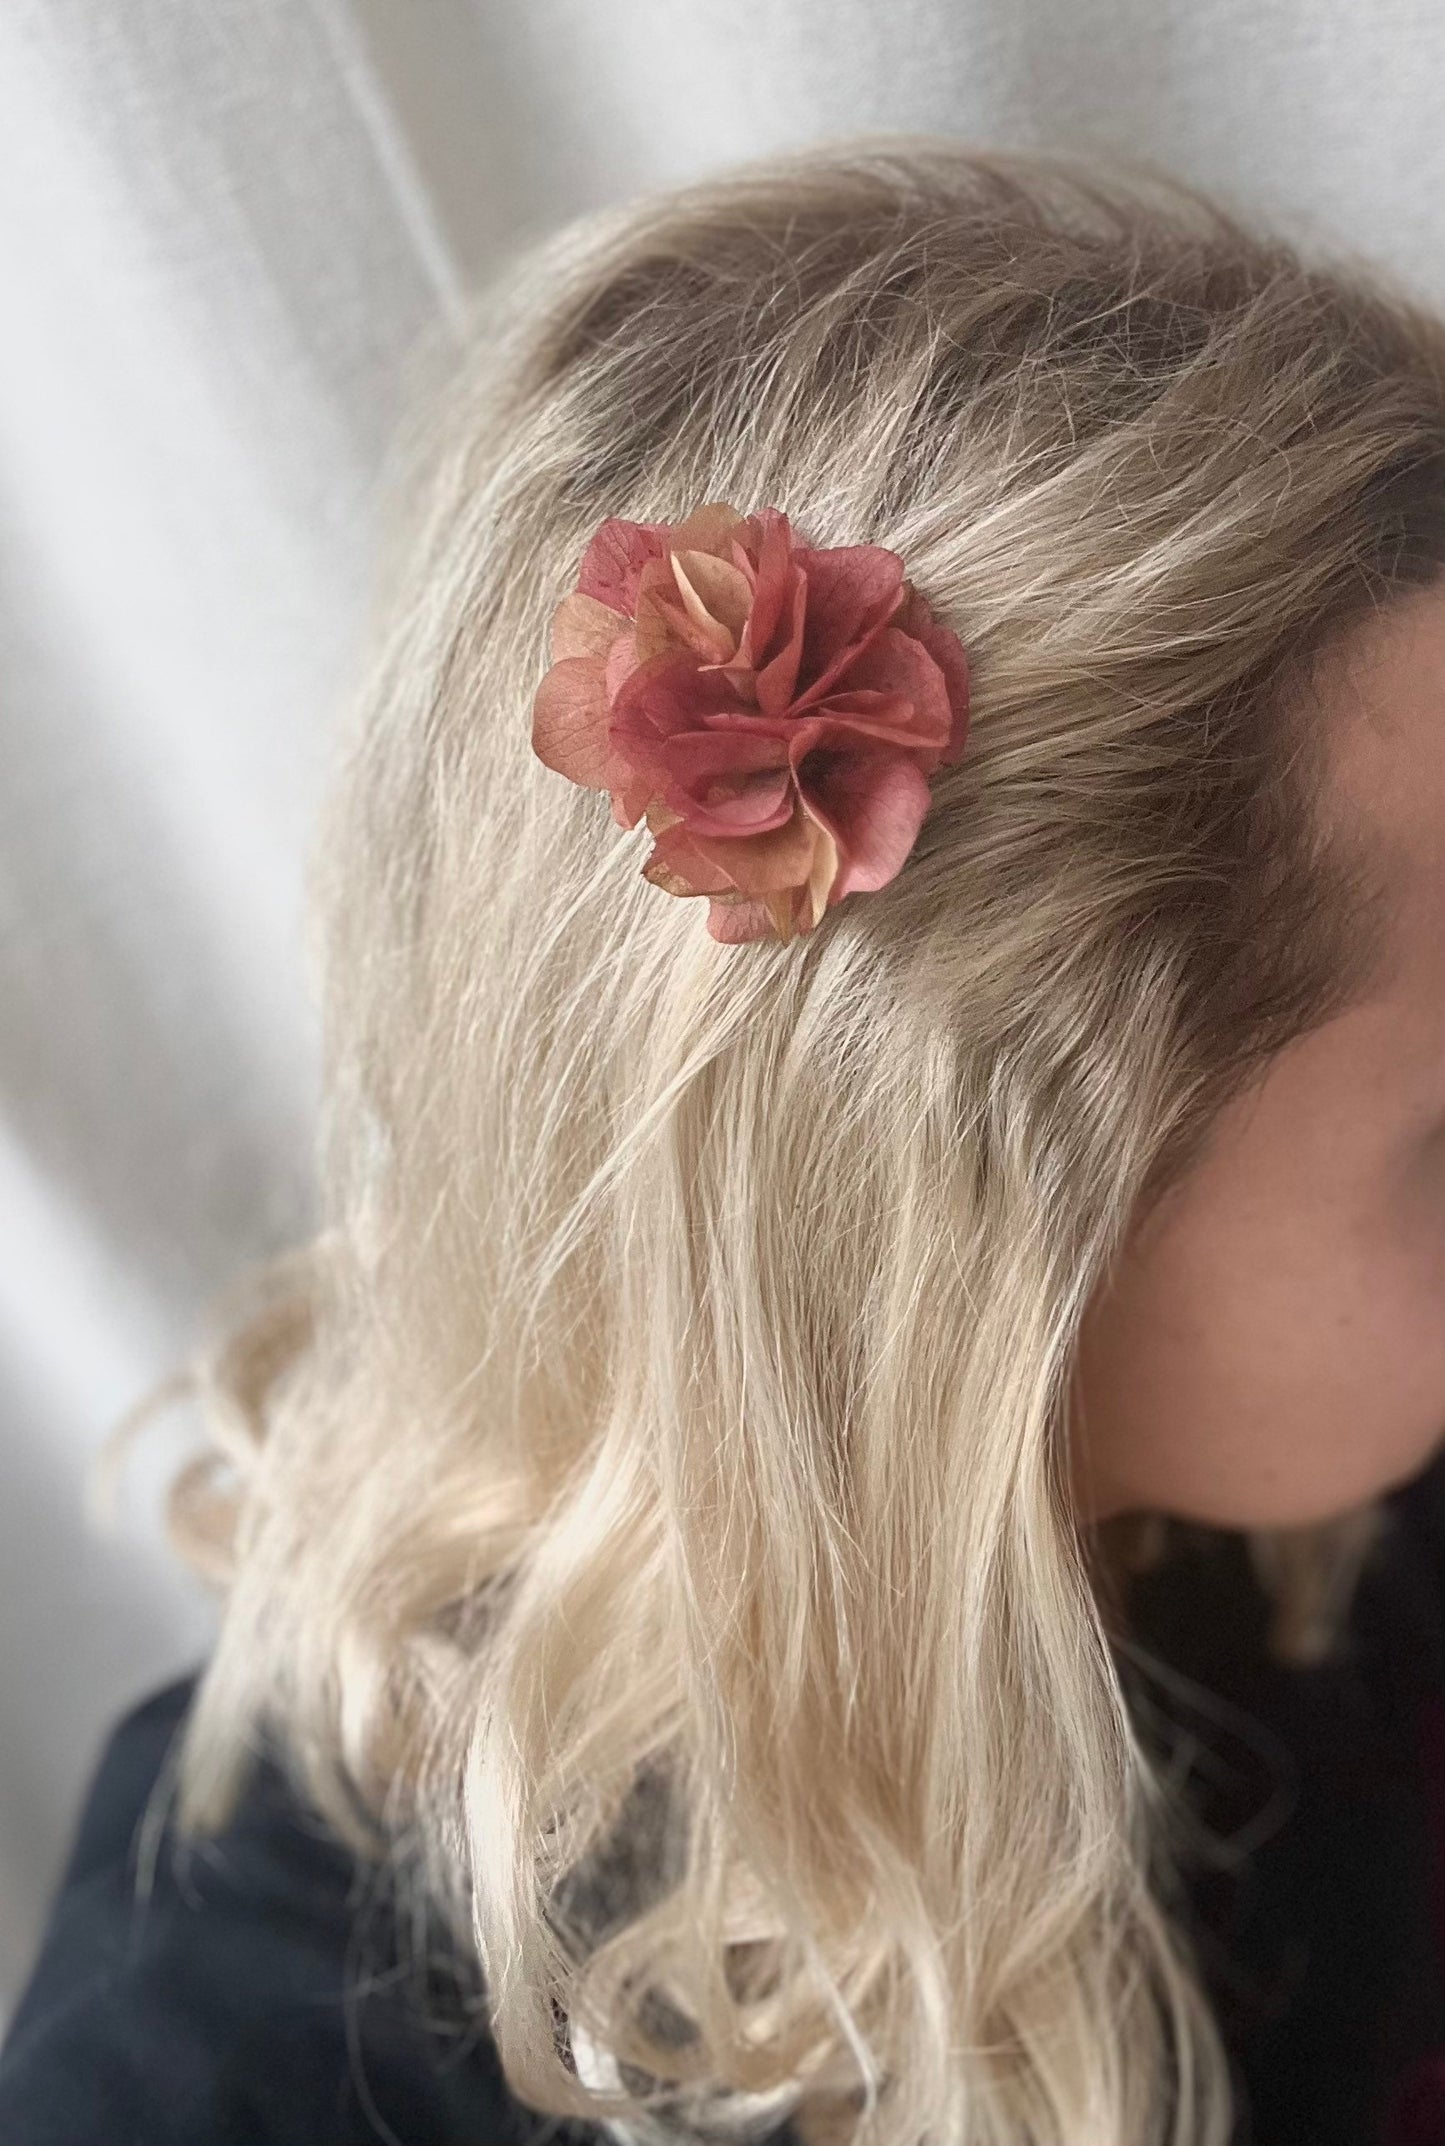 Handmade Bridesmaids Gift Hair Accessories, Dried Flower Hair Clips Red Teal Green Burgundy, Small Floral Hair Piece